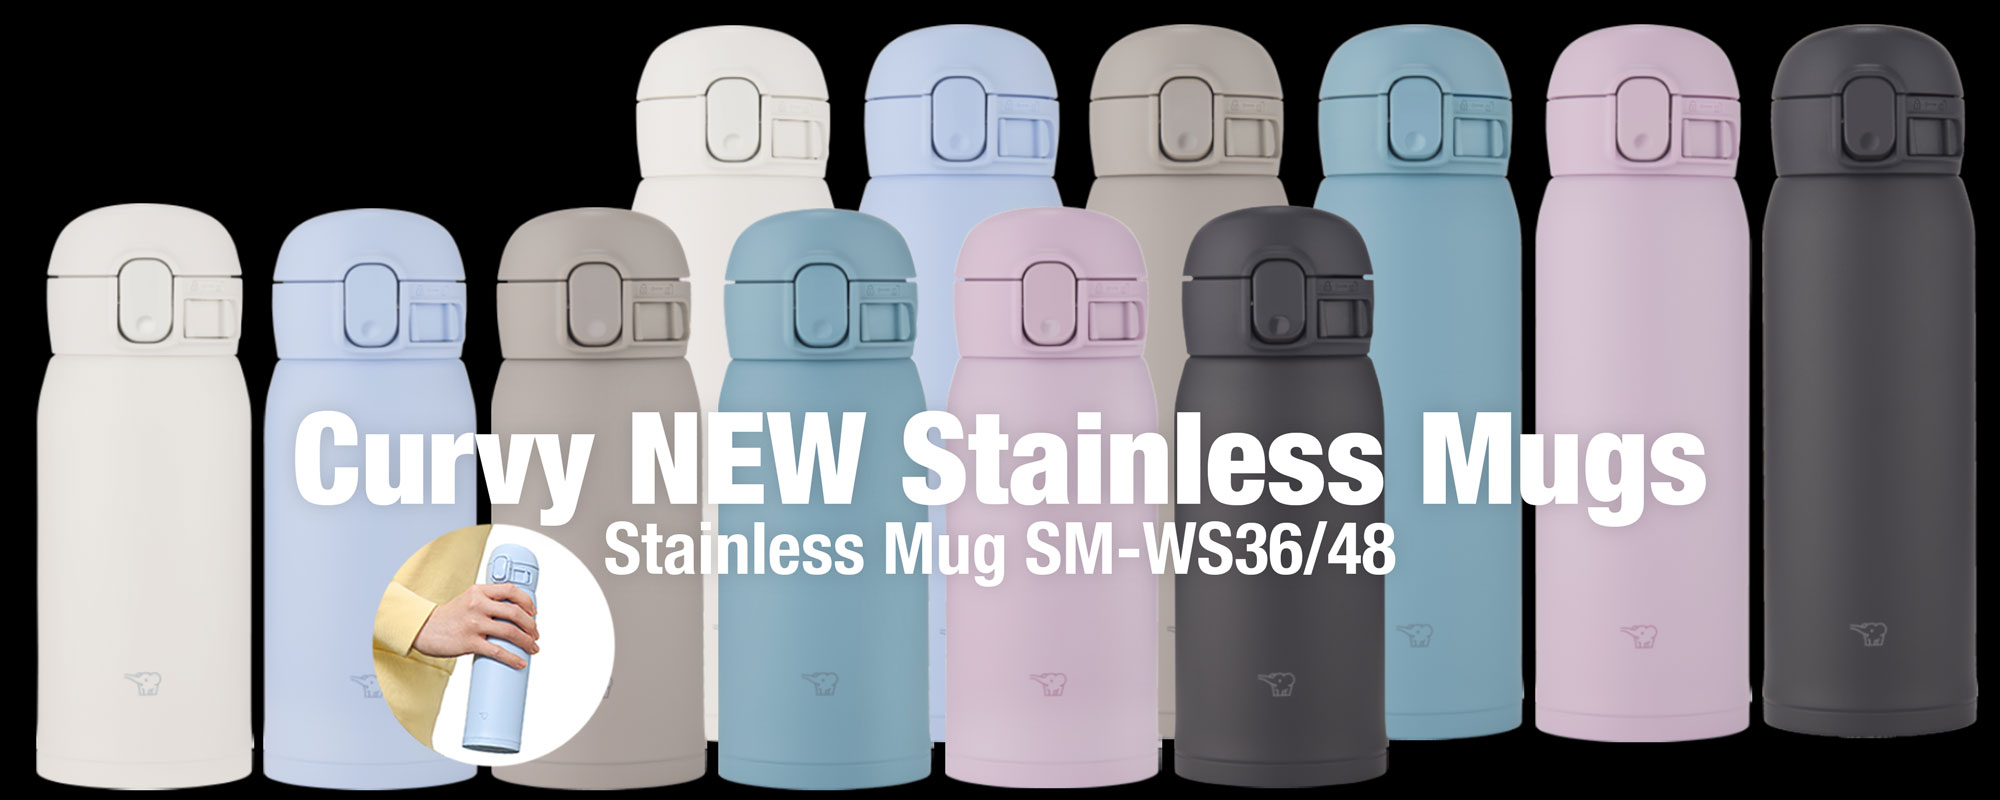 Curvy NEW Stainless Mugs